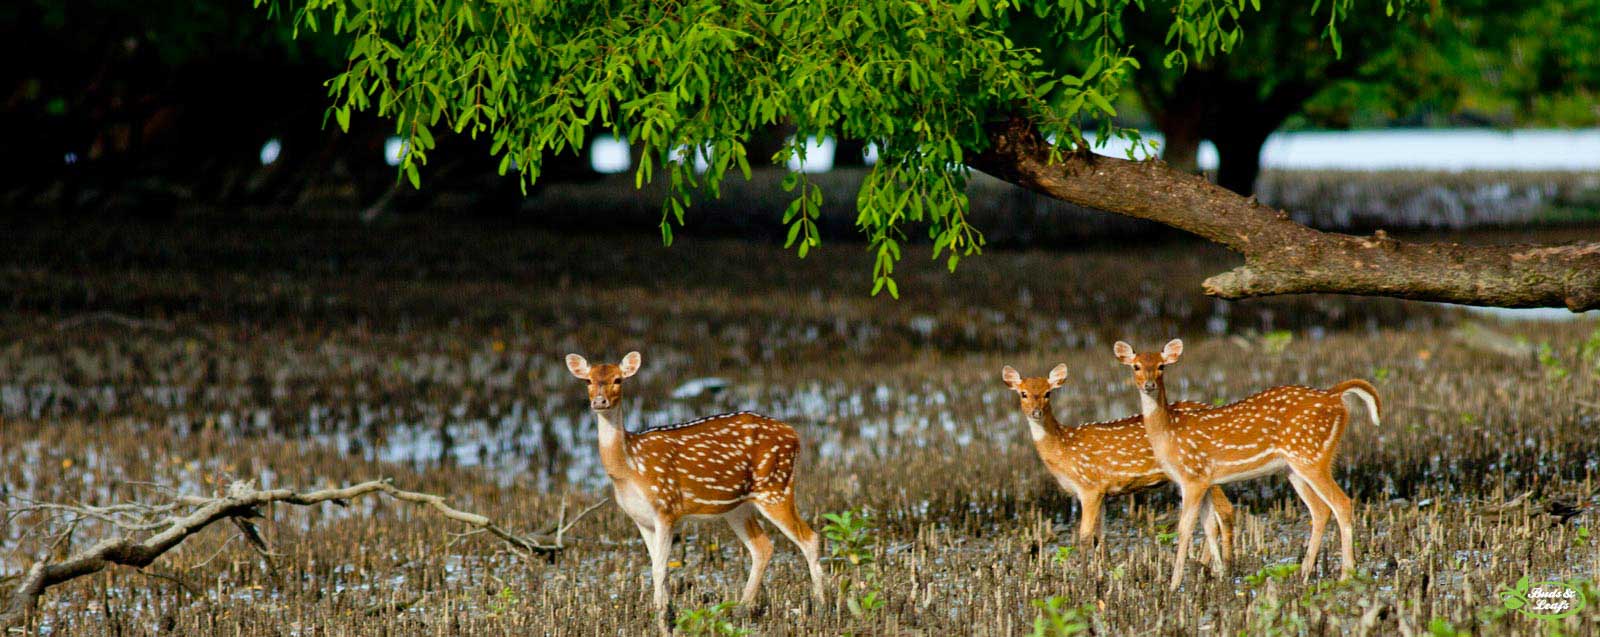 Best Sundarban Tour operator in Bangladesh with adventure & Honey Hunting in mangrove